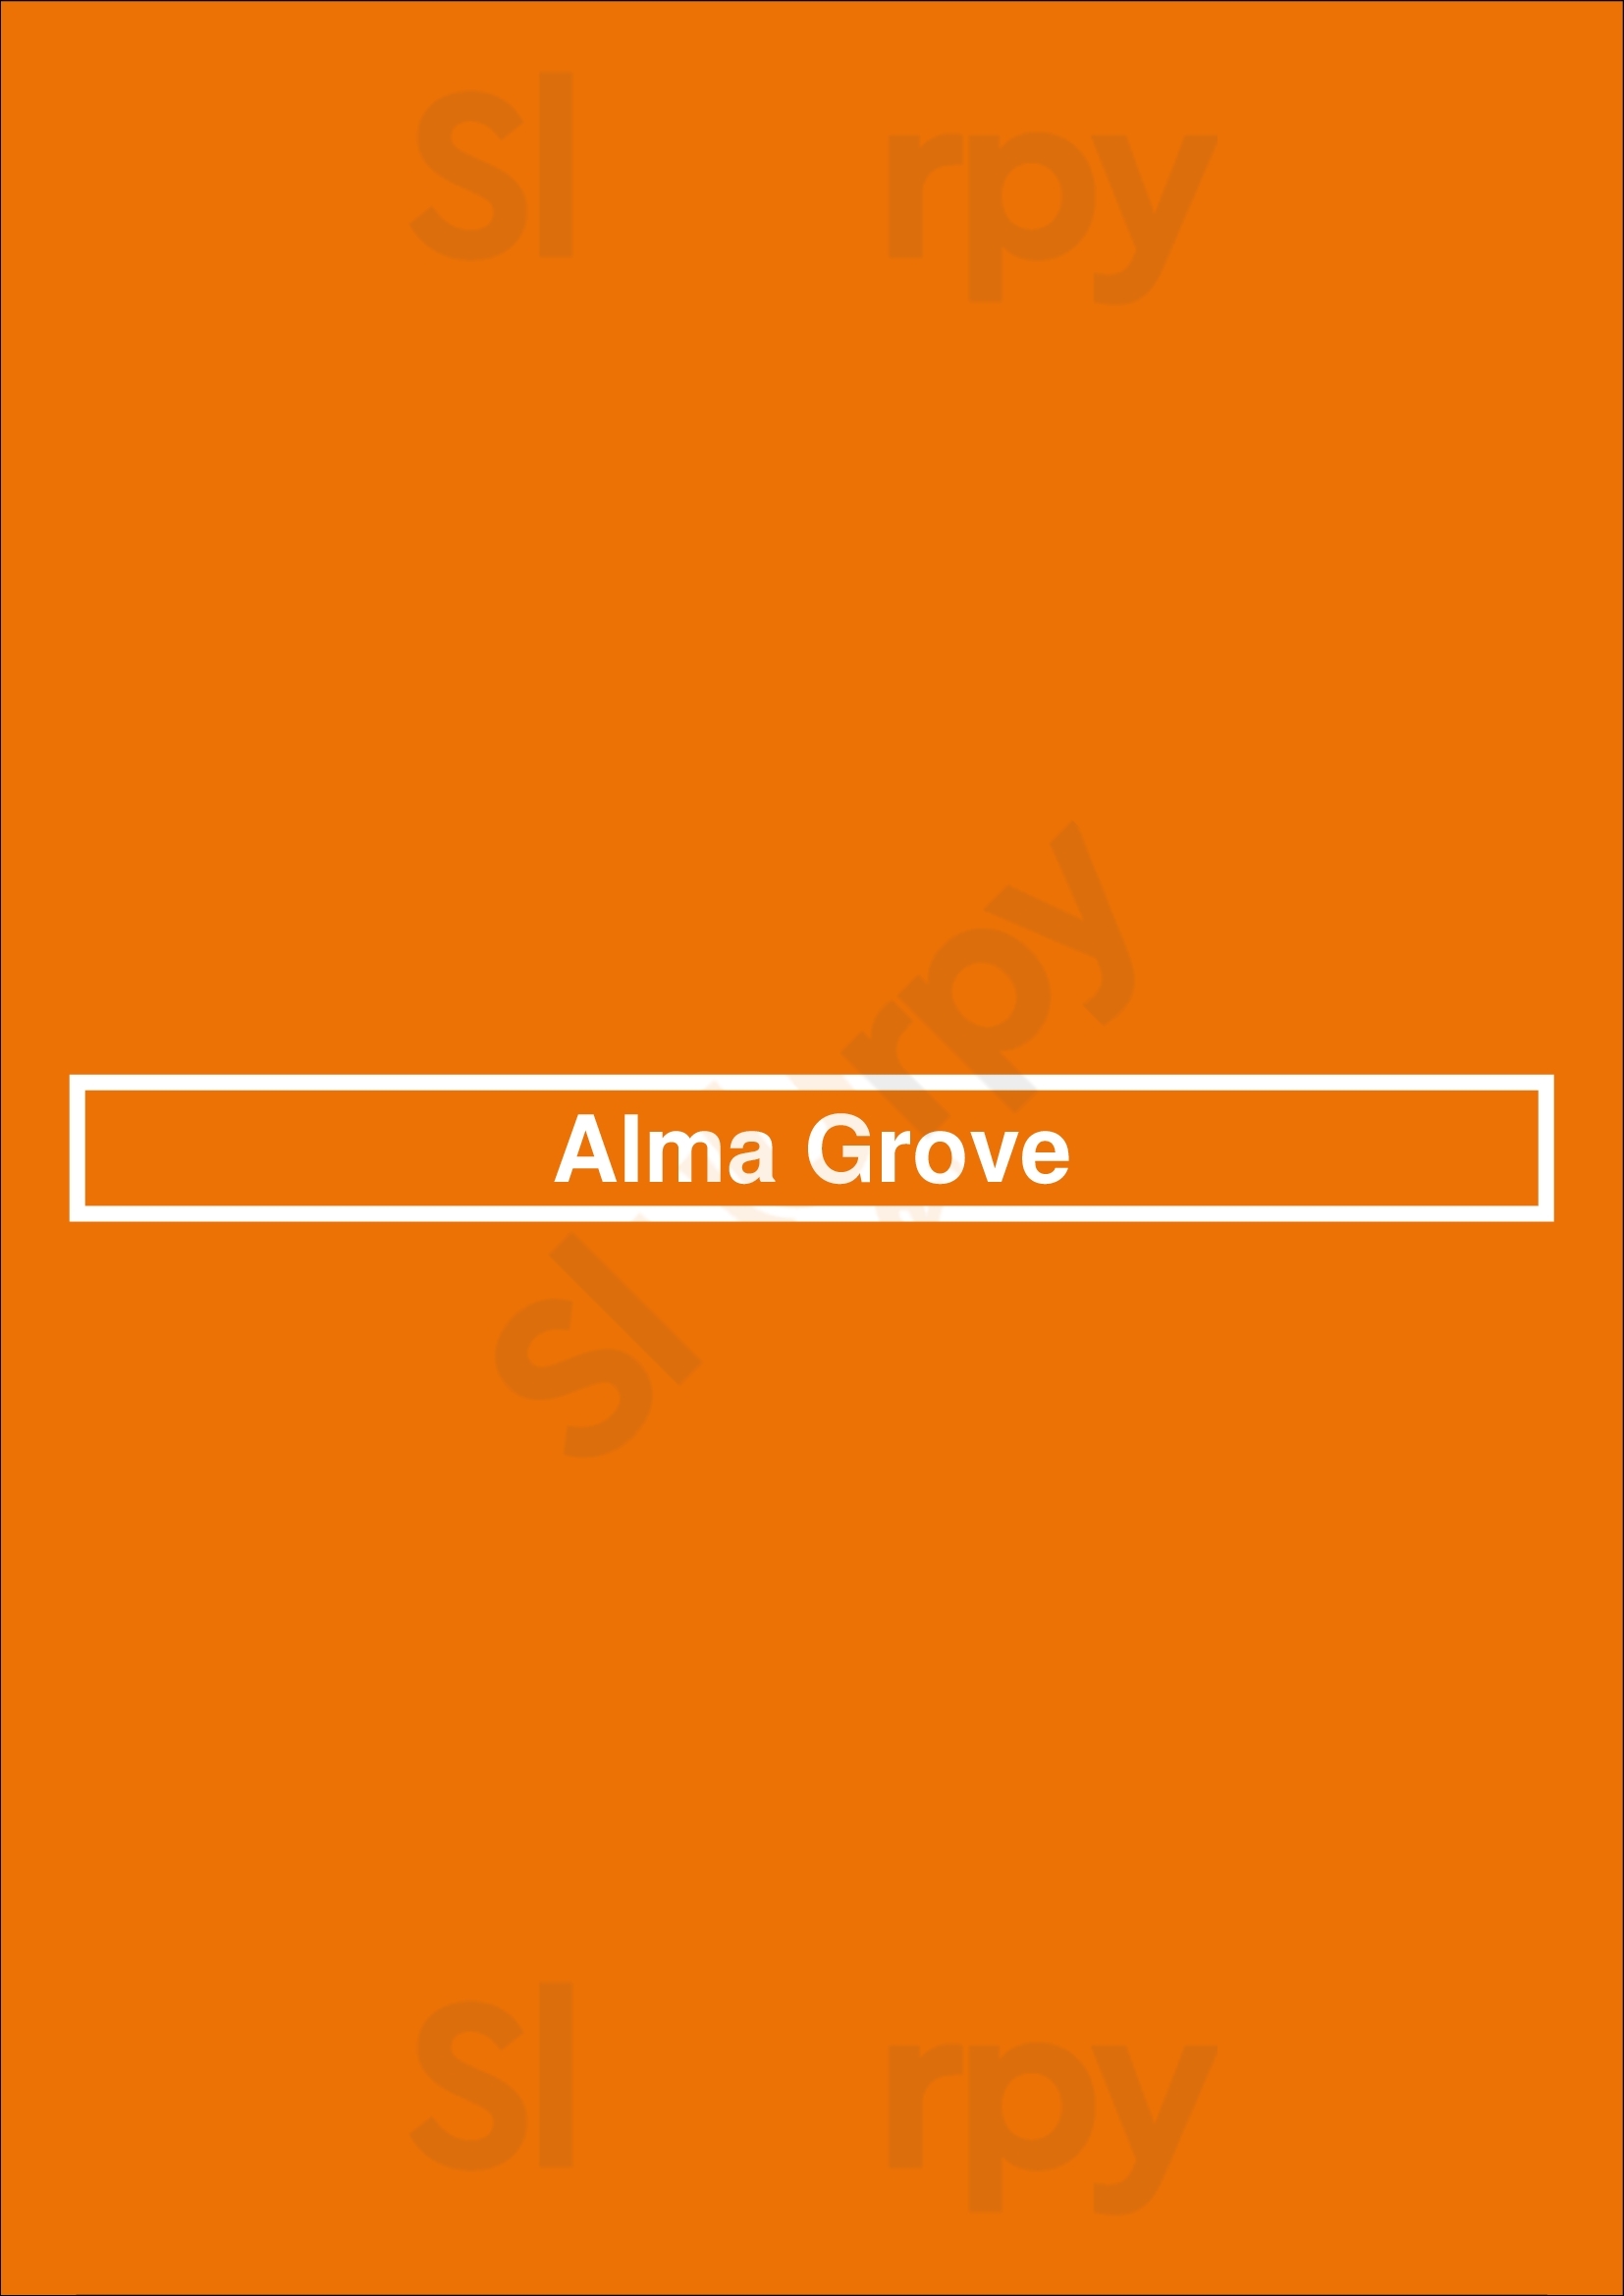 Alma Grove Miami Menu - 1